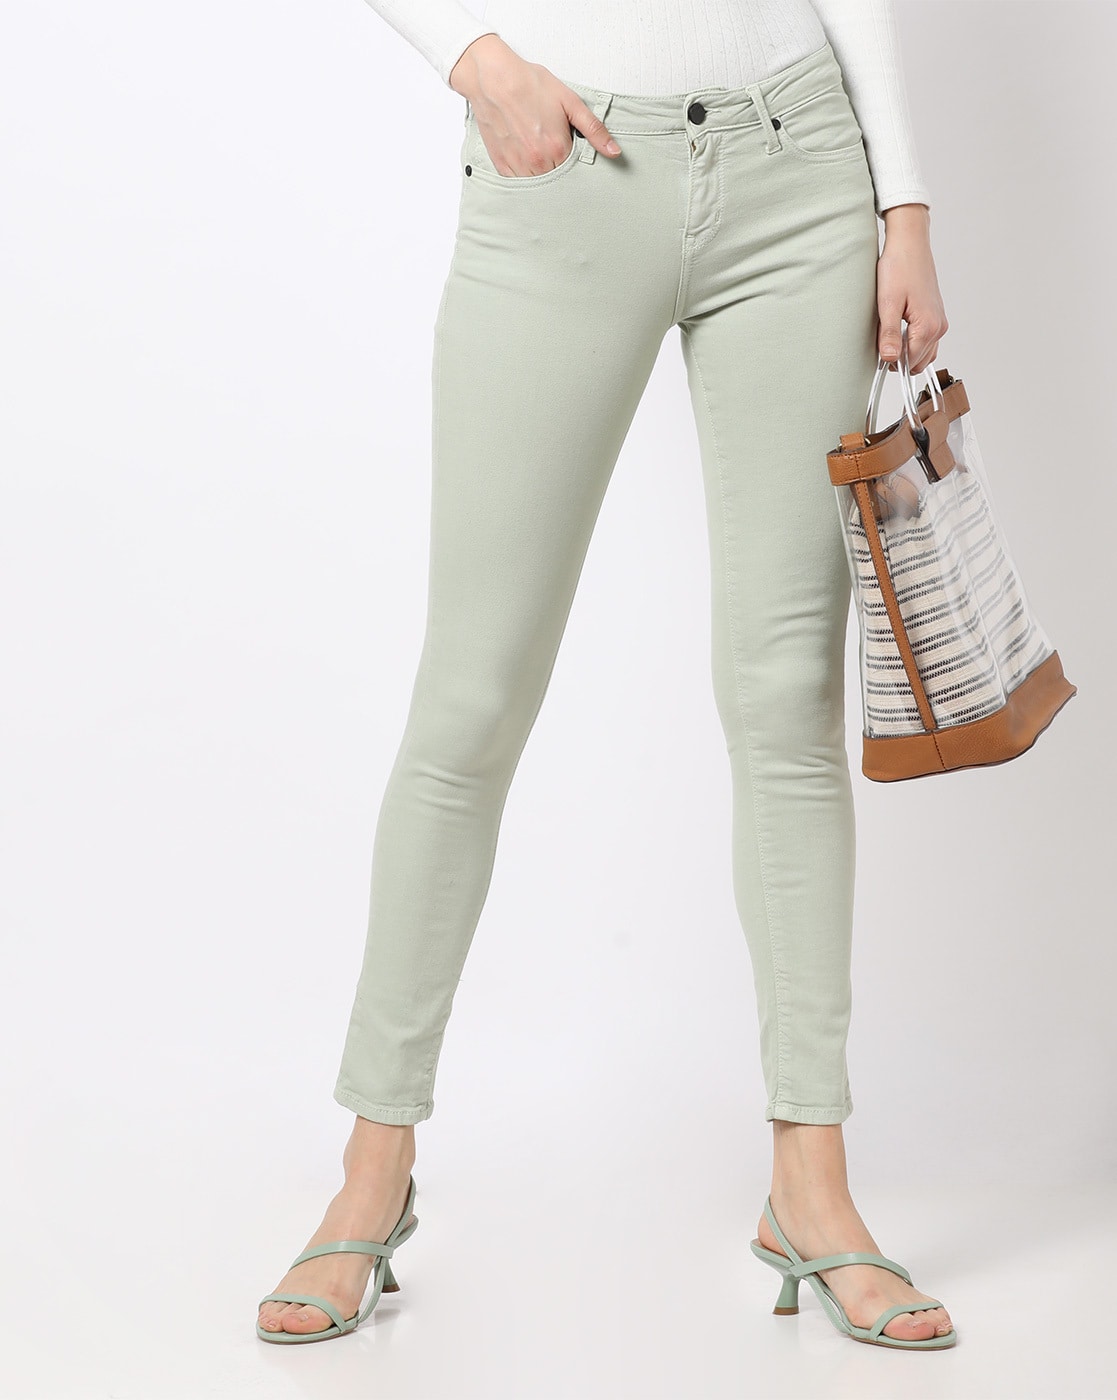 mint green skinny jeans